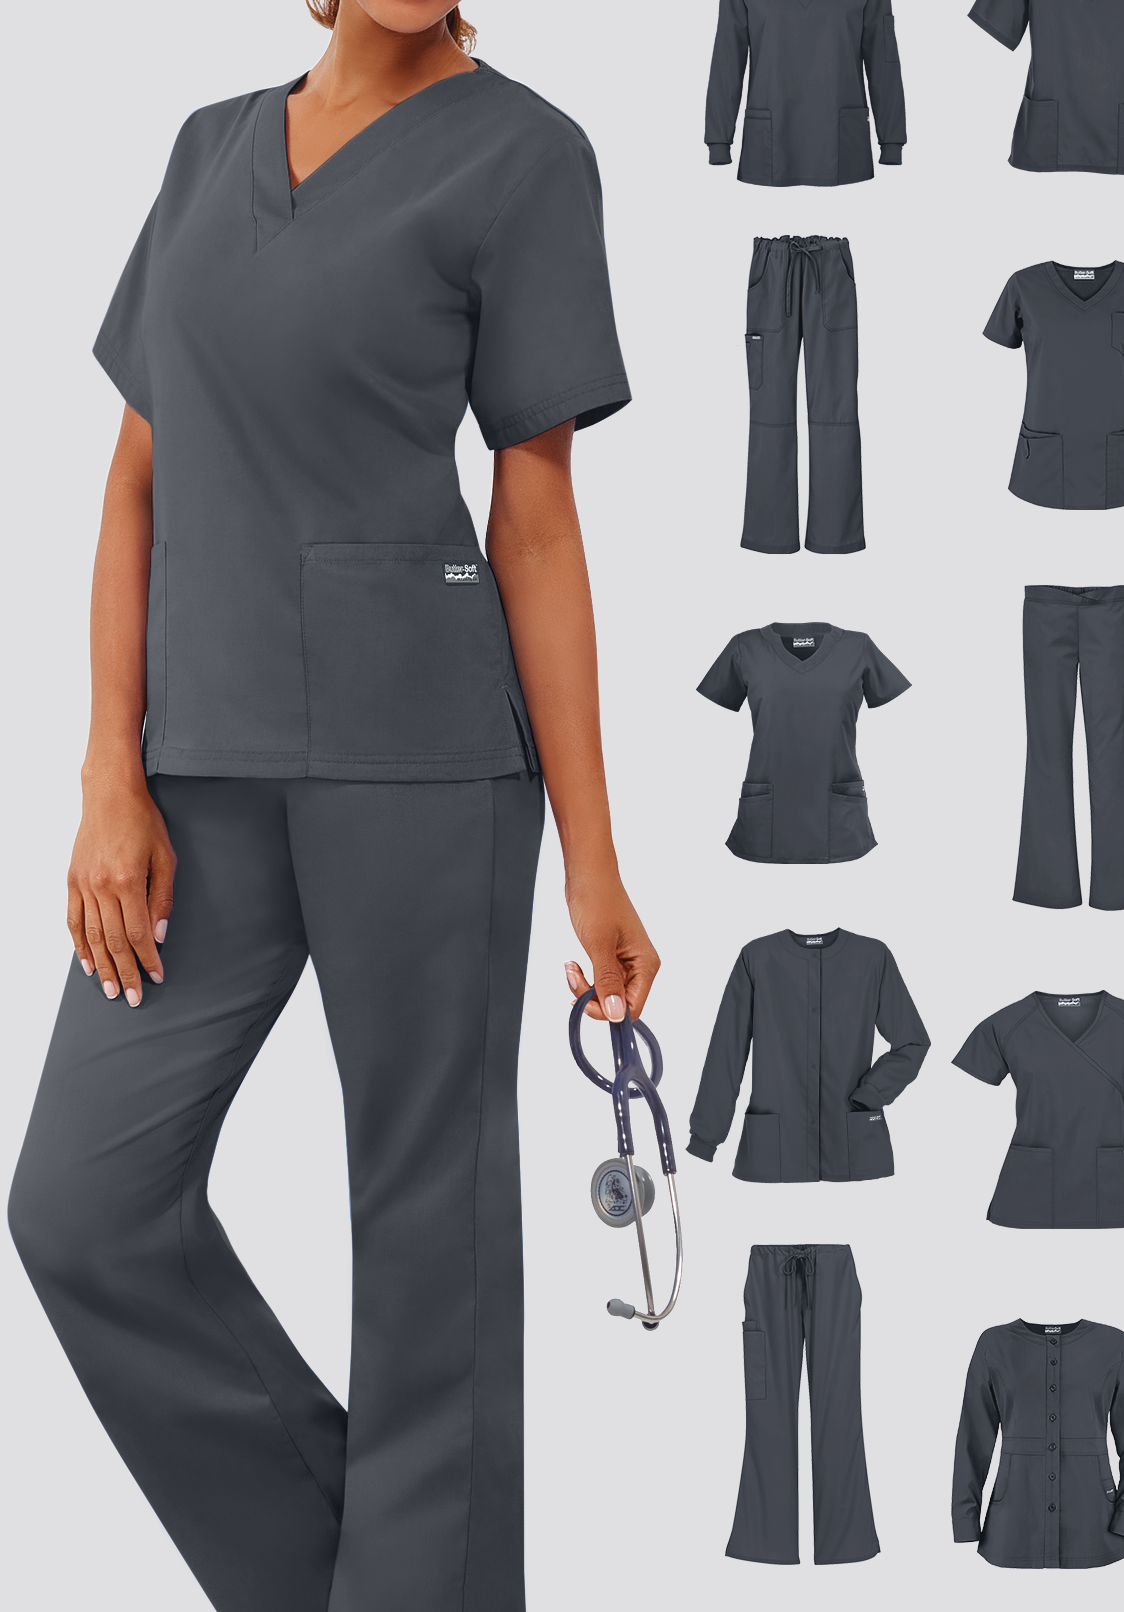 Nursing Home & Healthcare Uniforms | Uniforms